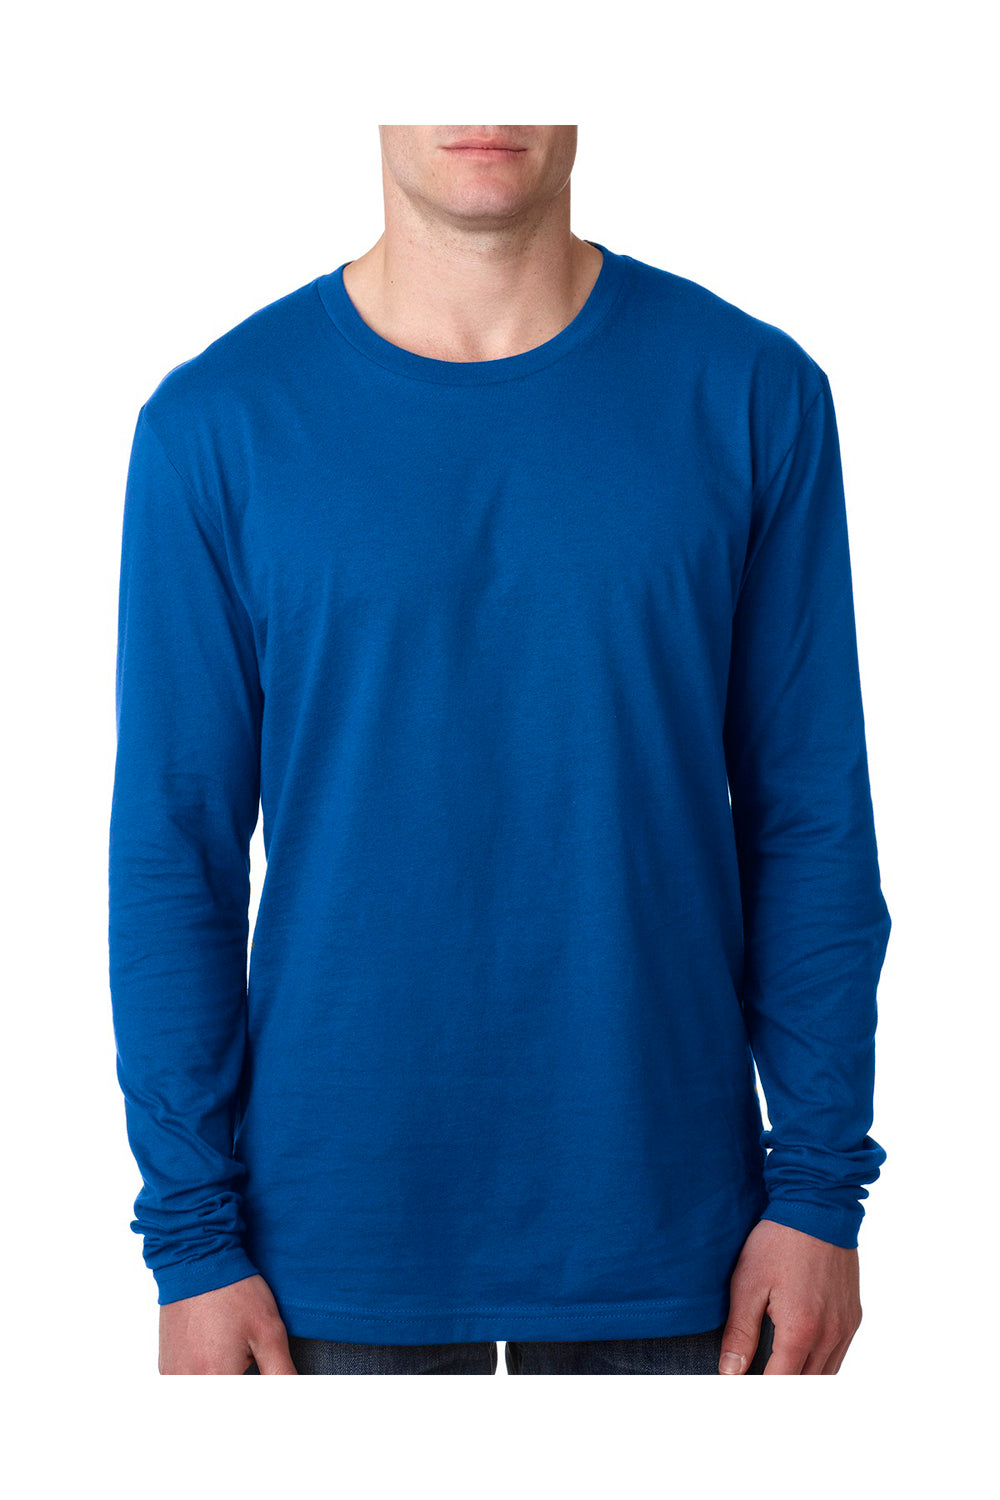 Next Level N3601 Mens Fine Jersey Long Sleeve Crewneck T-Shirt Royal Blue Front